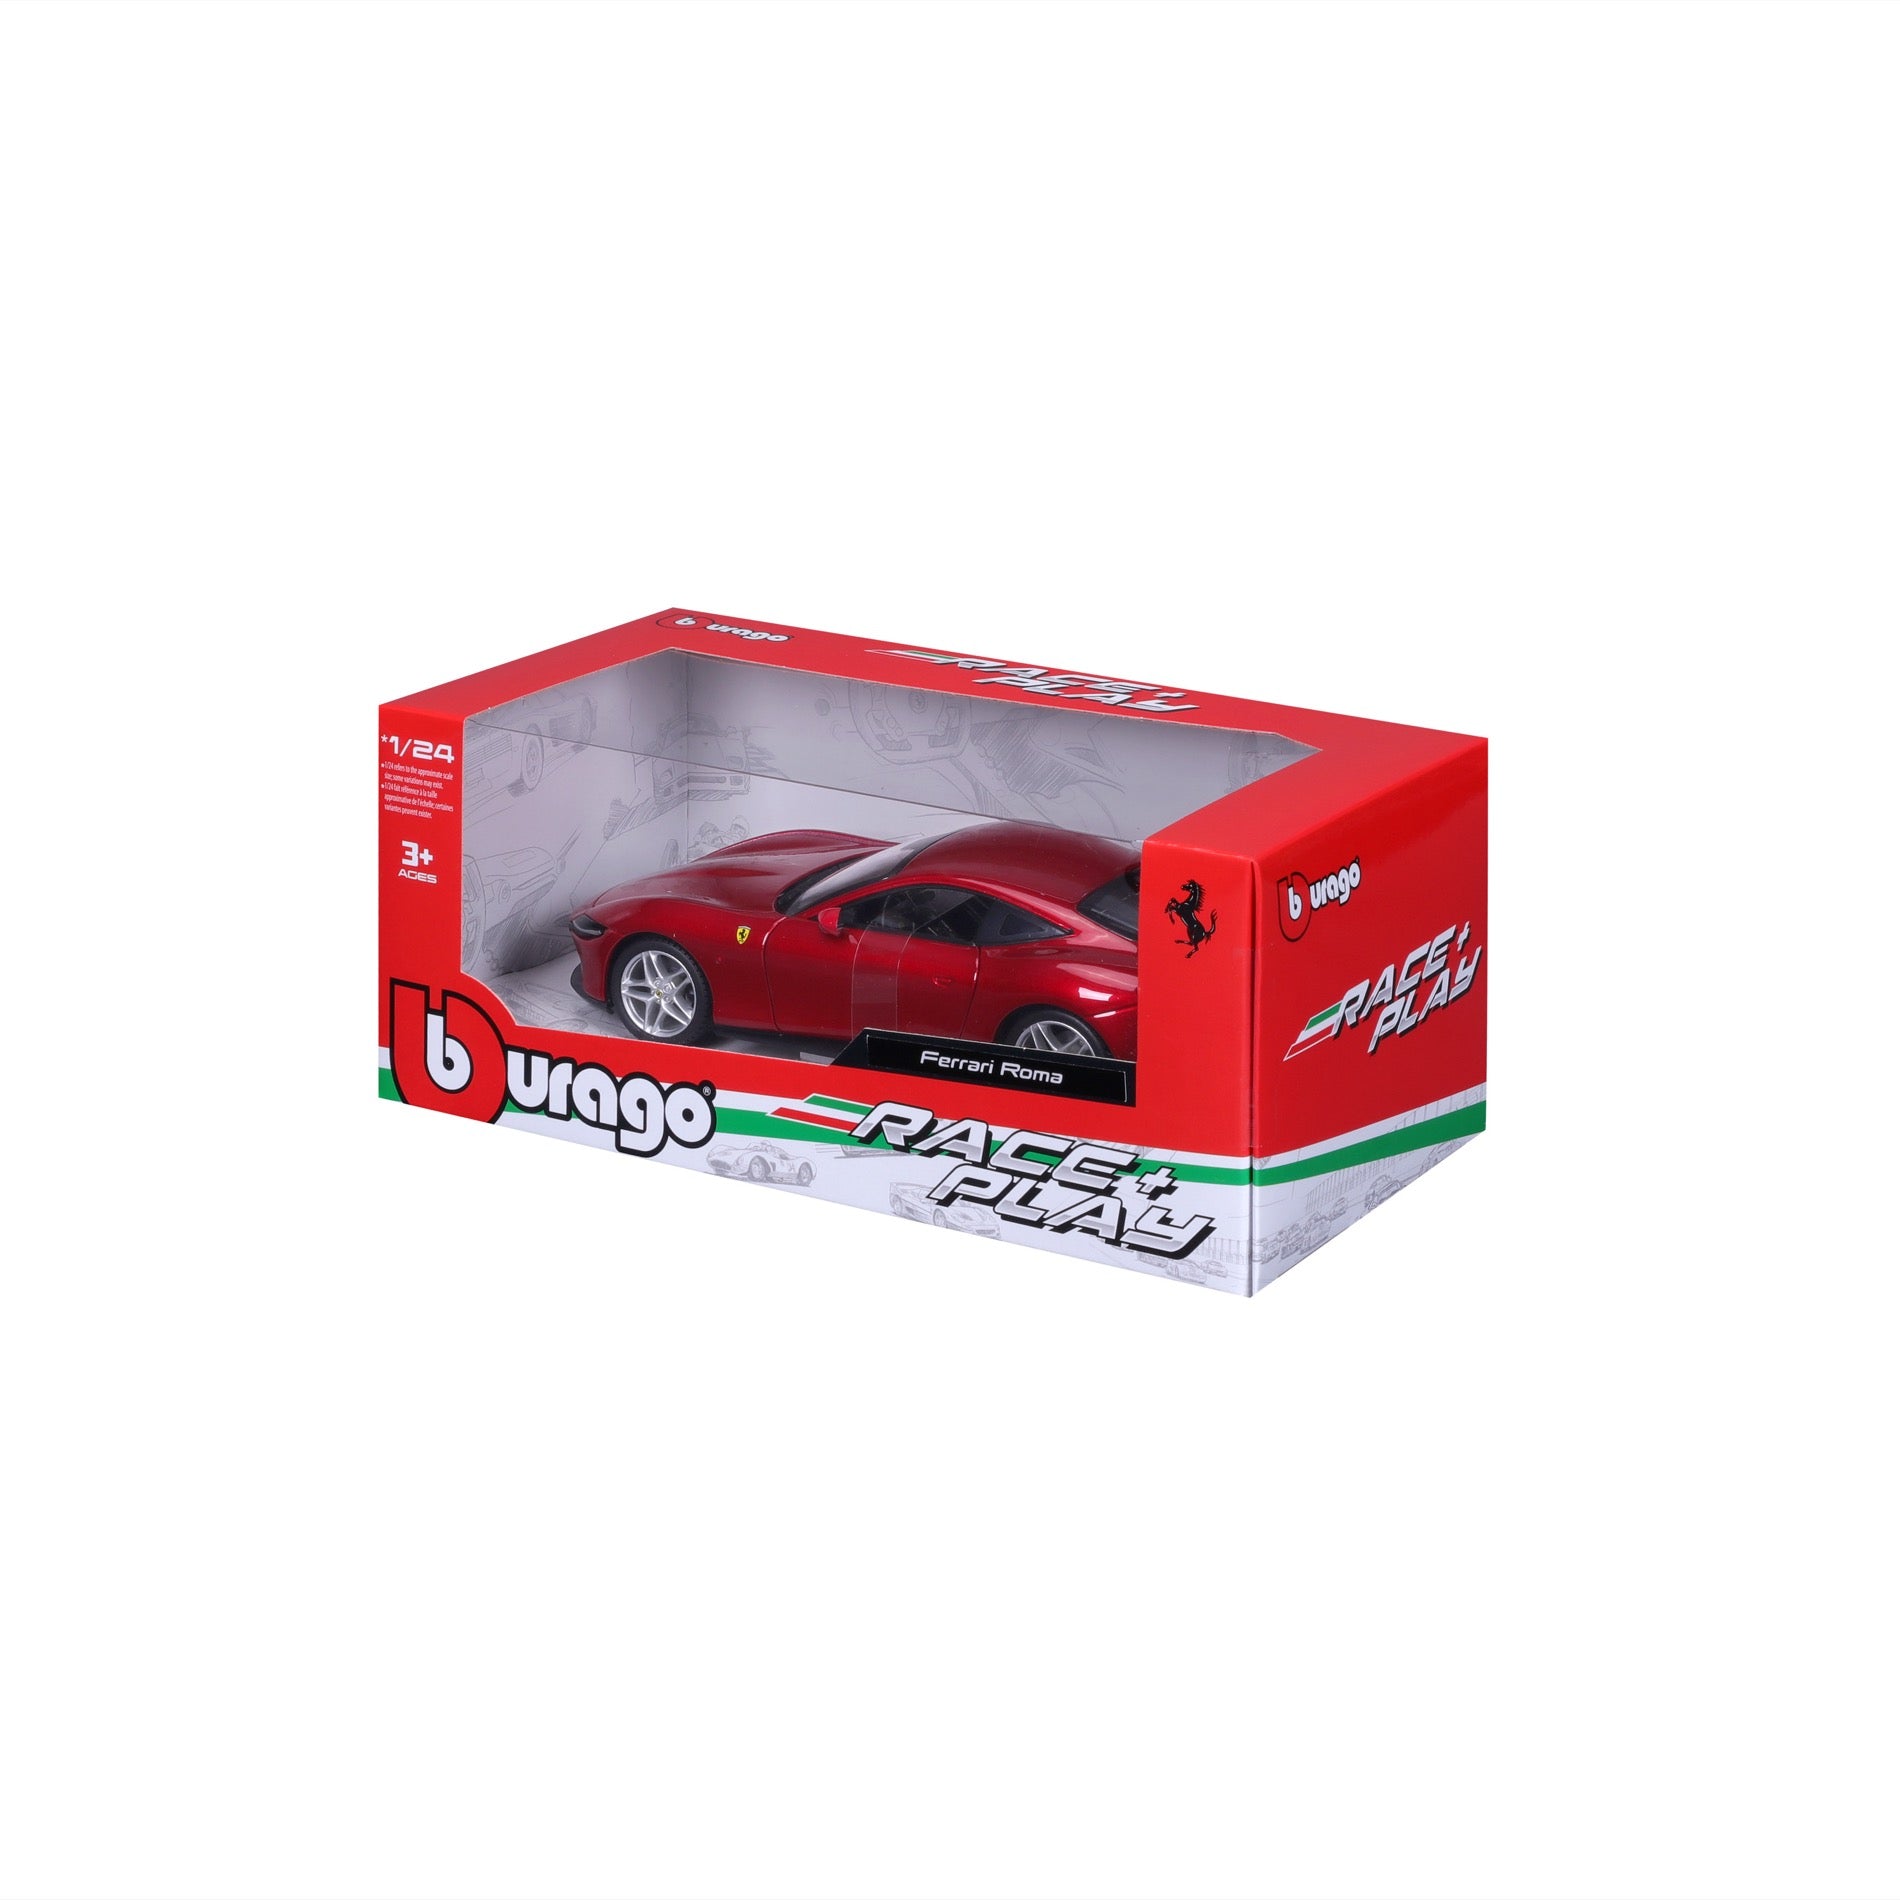 18-26029 - Bburago - 1:24 - Ferrari R&P - Ferrari - Rossa